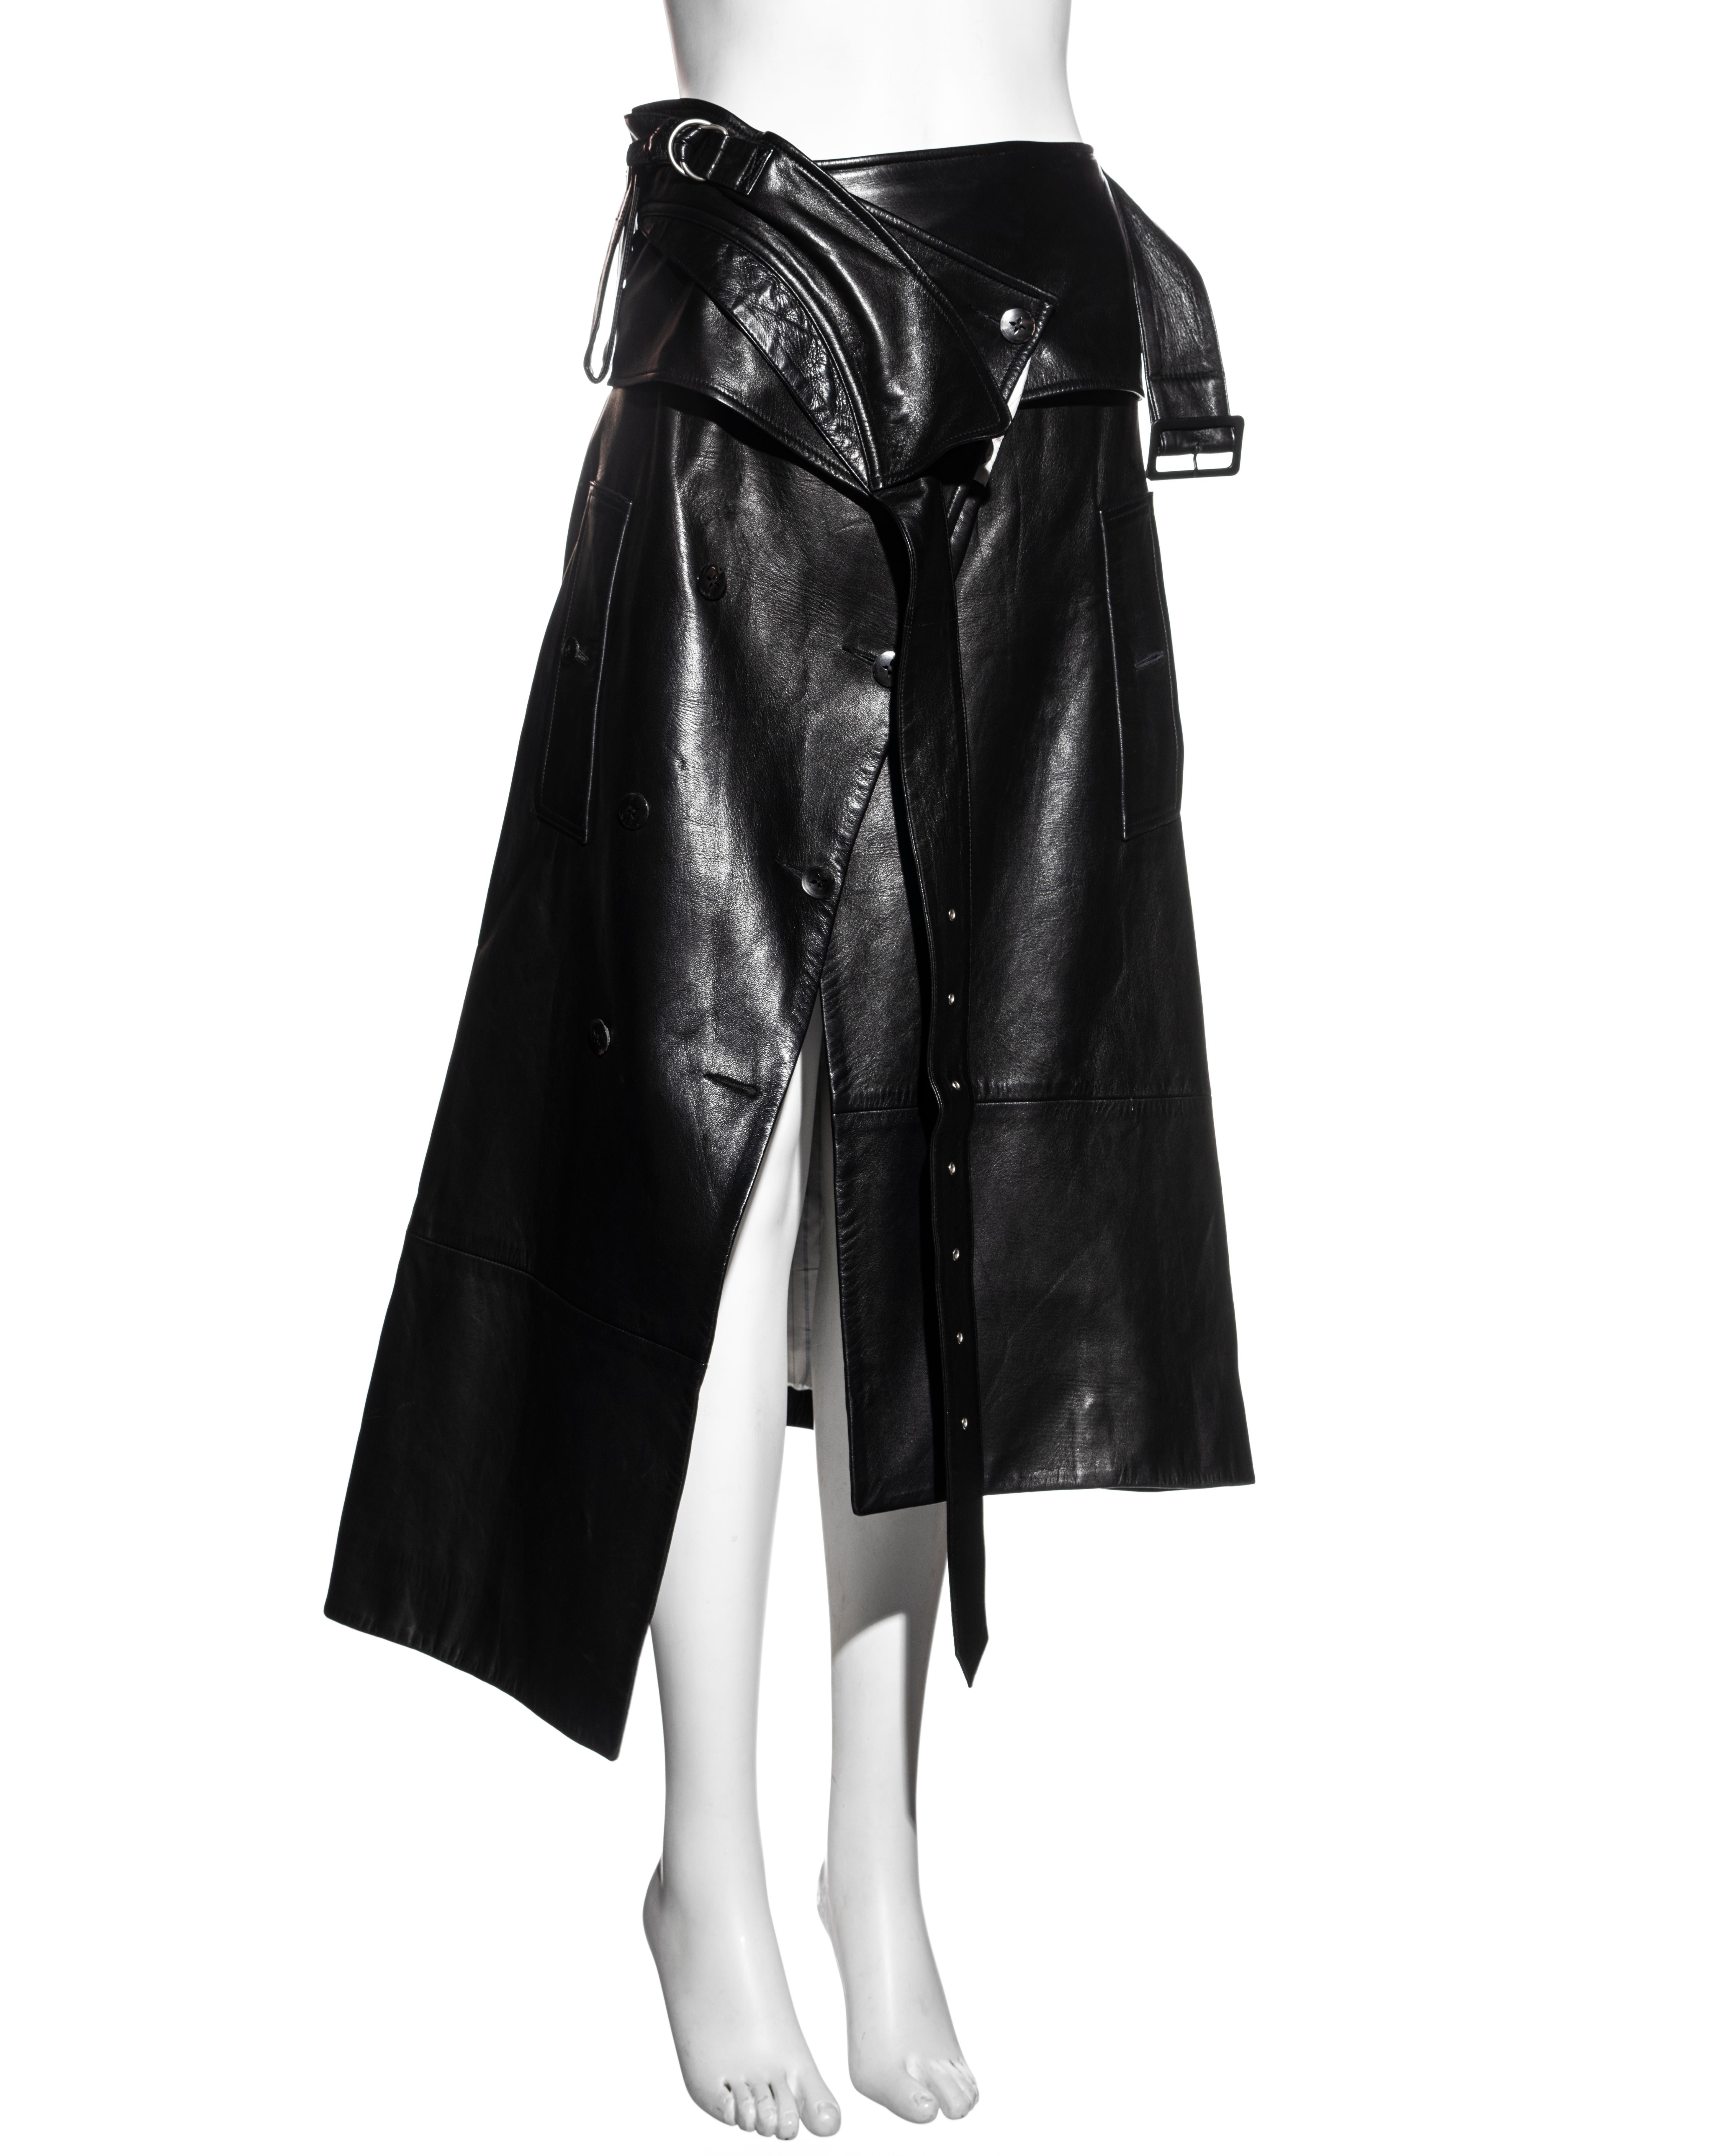 ▪ John Galliano black leather deconstructed wrap skirt 
▪ Silver metal hardware 
▪ Designed to look like a leather coat deconstructed into a skirt
▪ Front button fastenings 
▪ Asymmetric hemline 
▪ FR 38 - UK 10 
▪ c. 2002